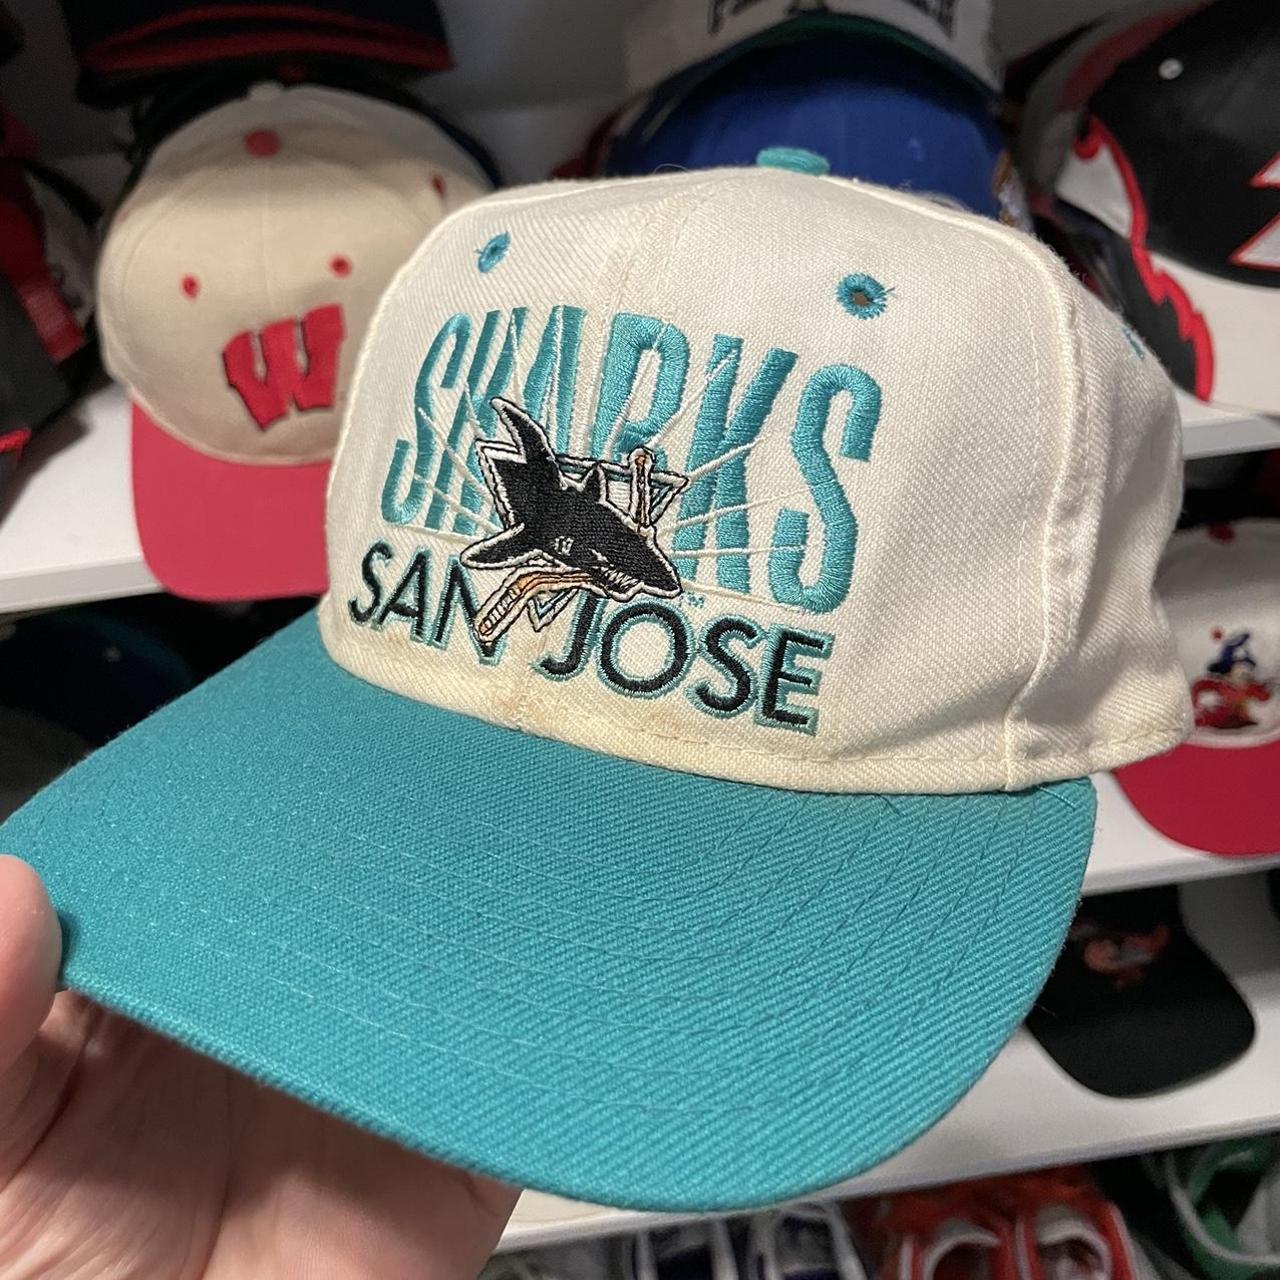 New Era NHL San Jose Sharks Fitted Hat Cap 7 - Depop